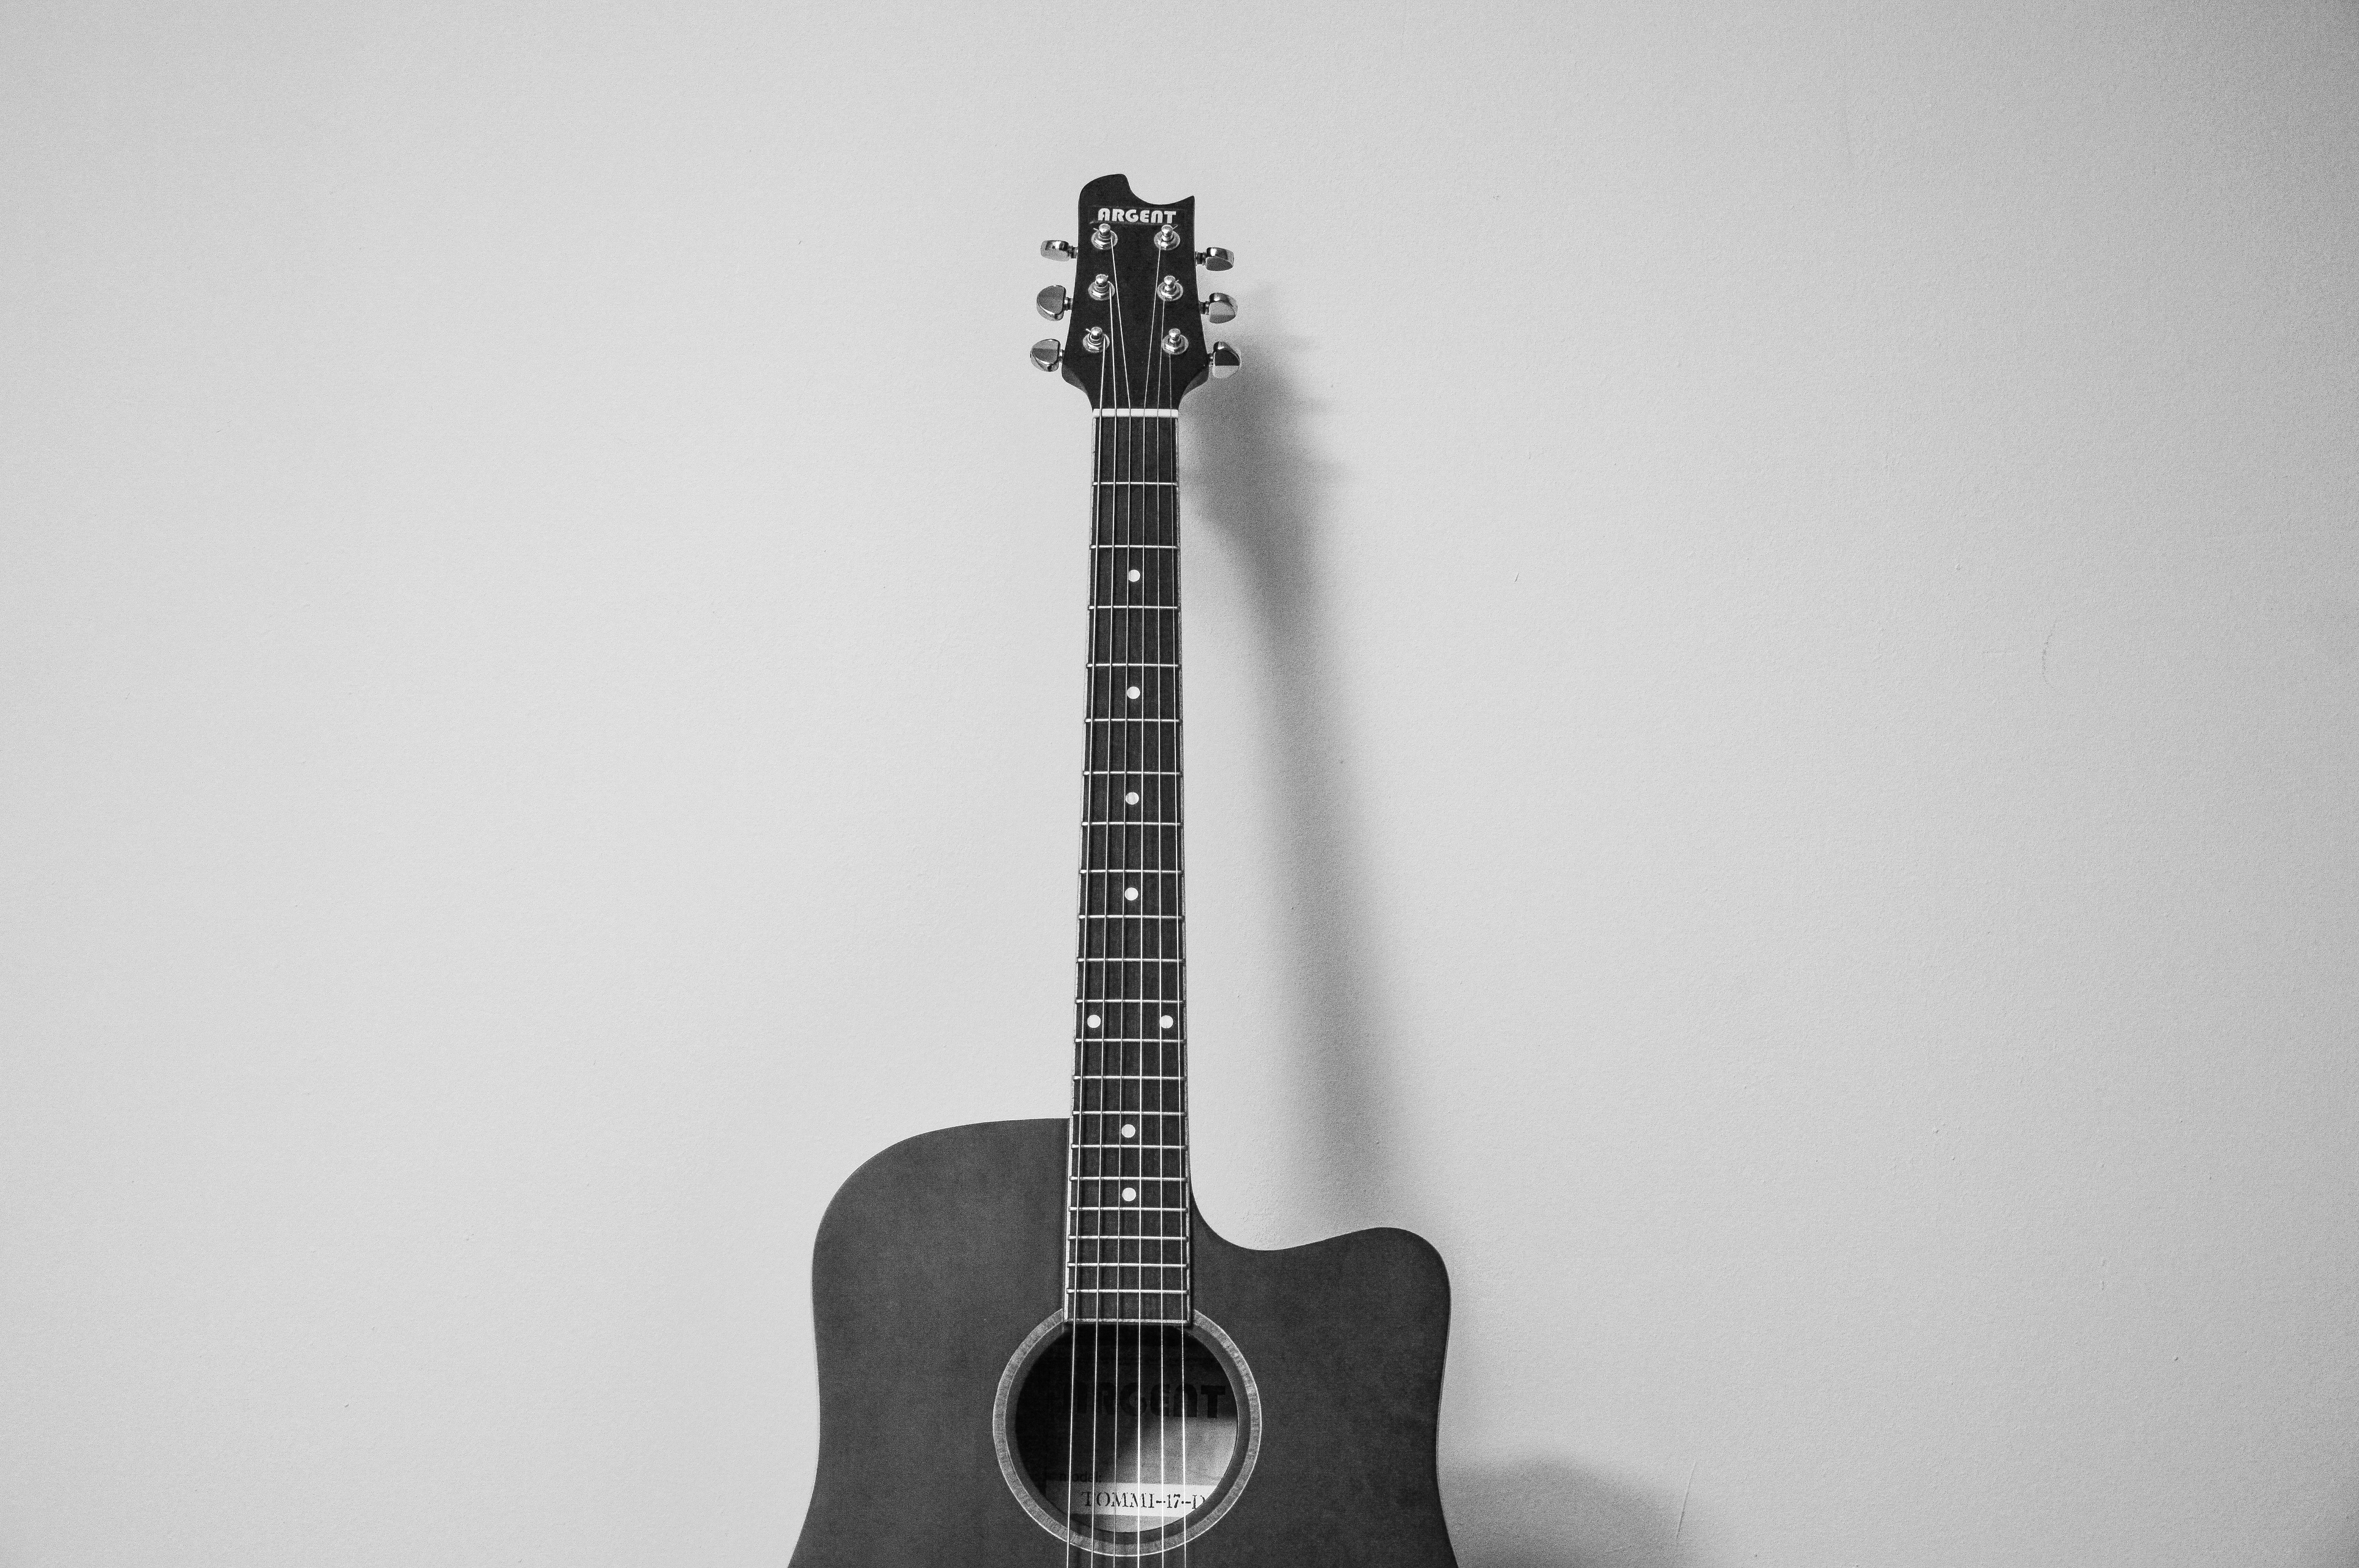 1920x1080 Background guitar, music, musical instrument, bw, chb